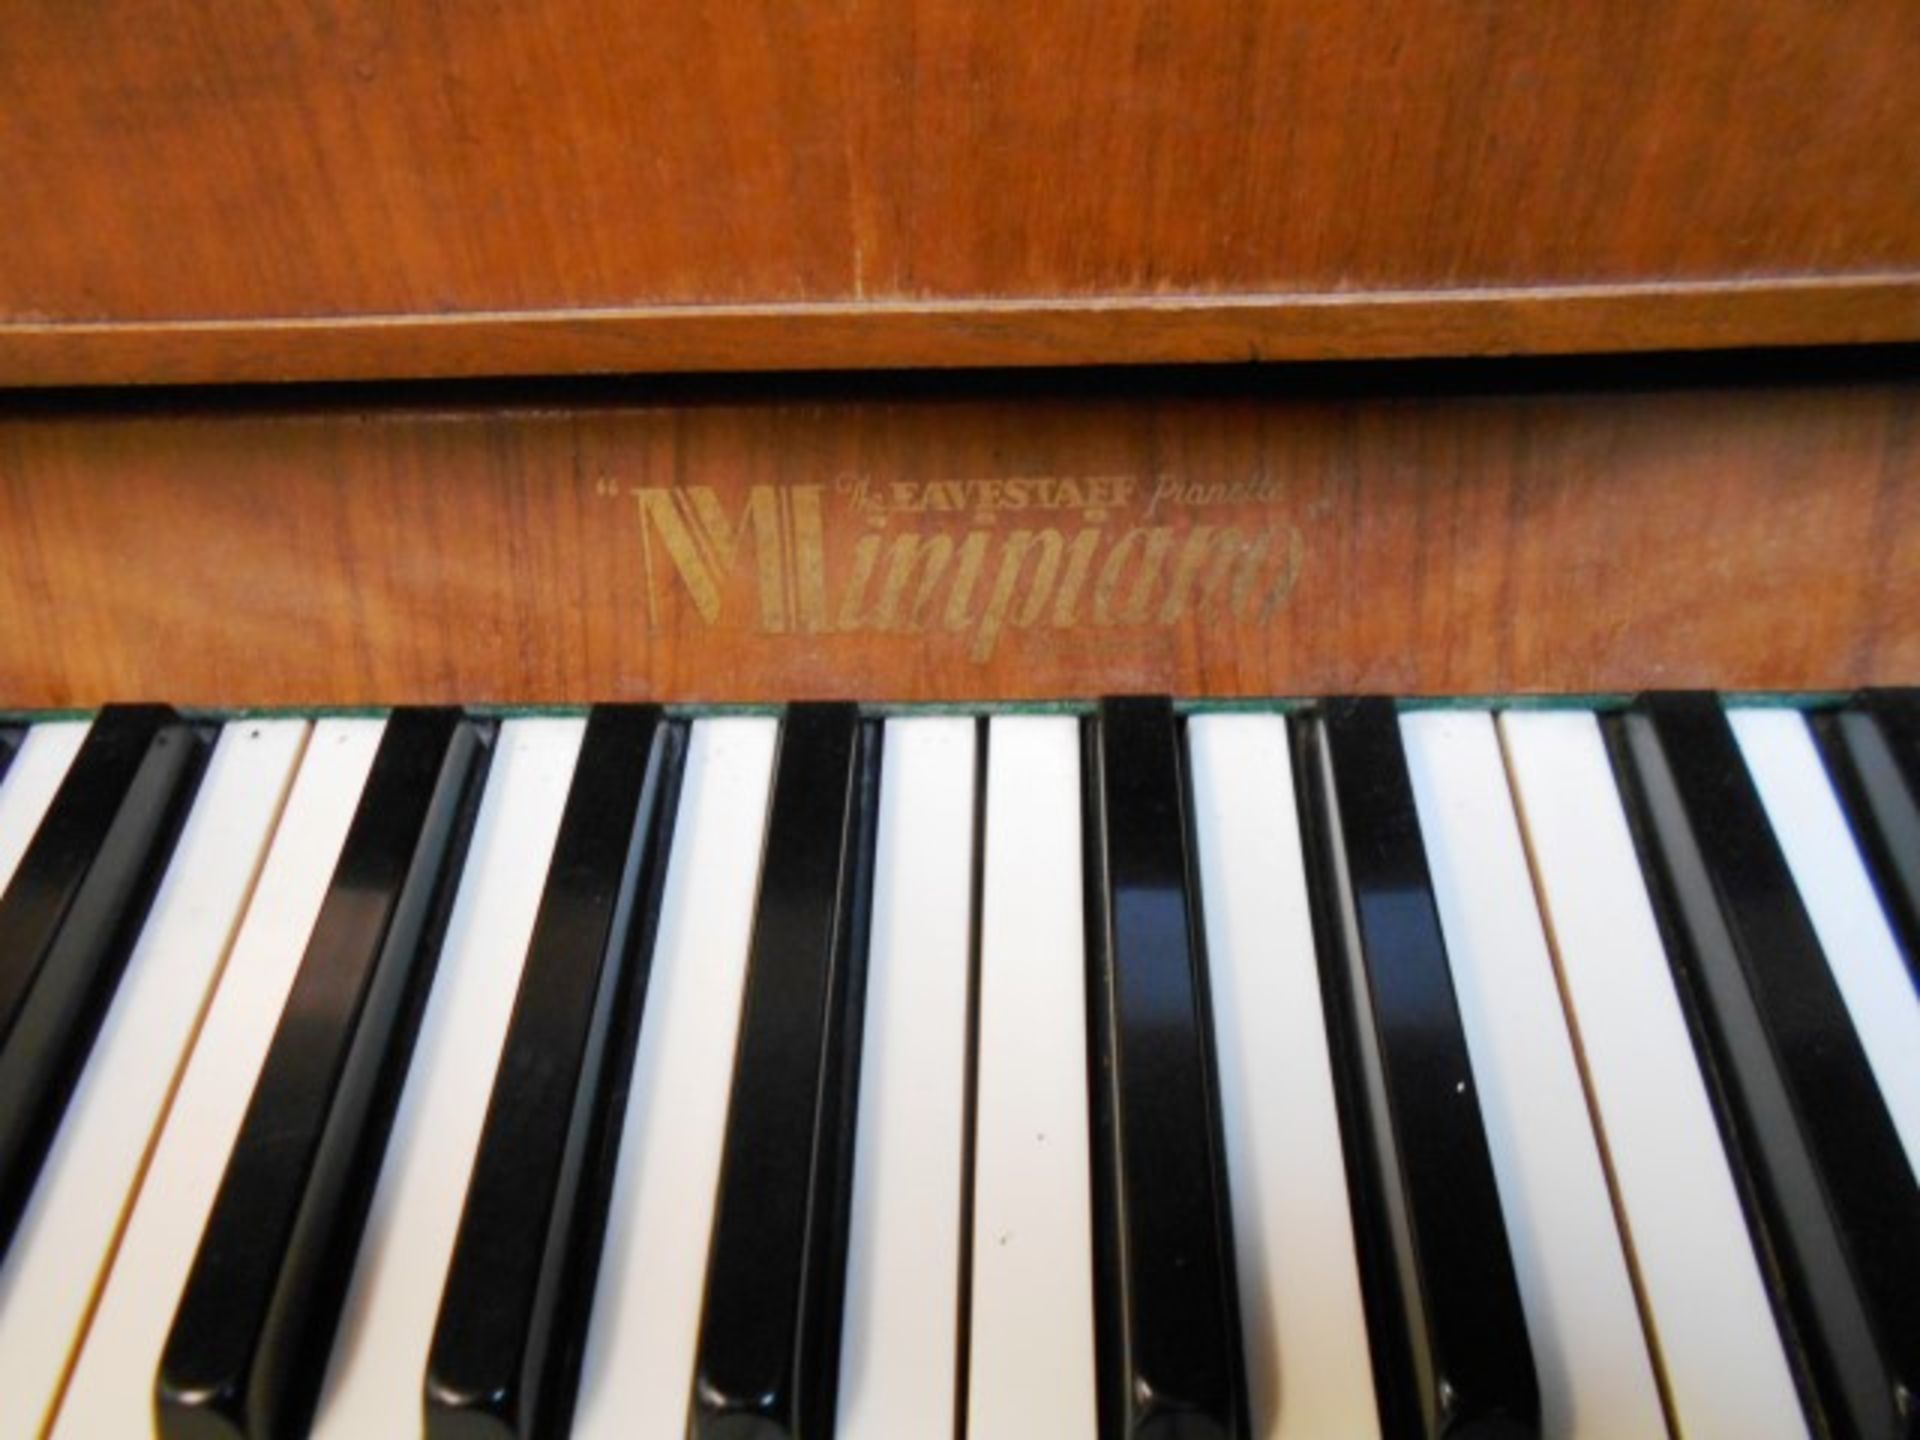 The Eavestaff Pianette Minipiano upright Piano wit - Image 2 of 2